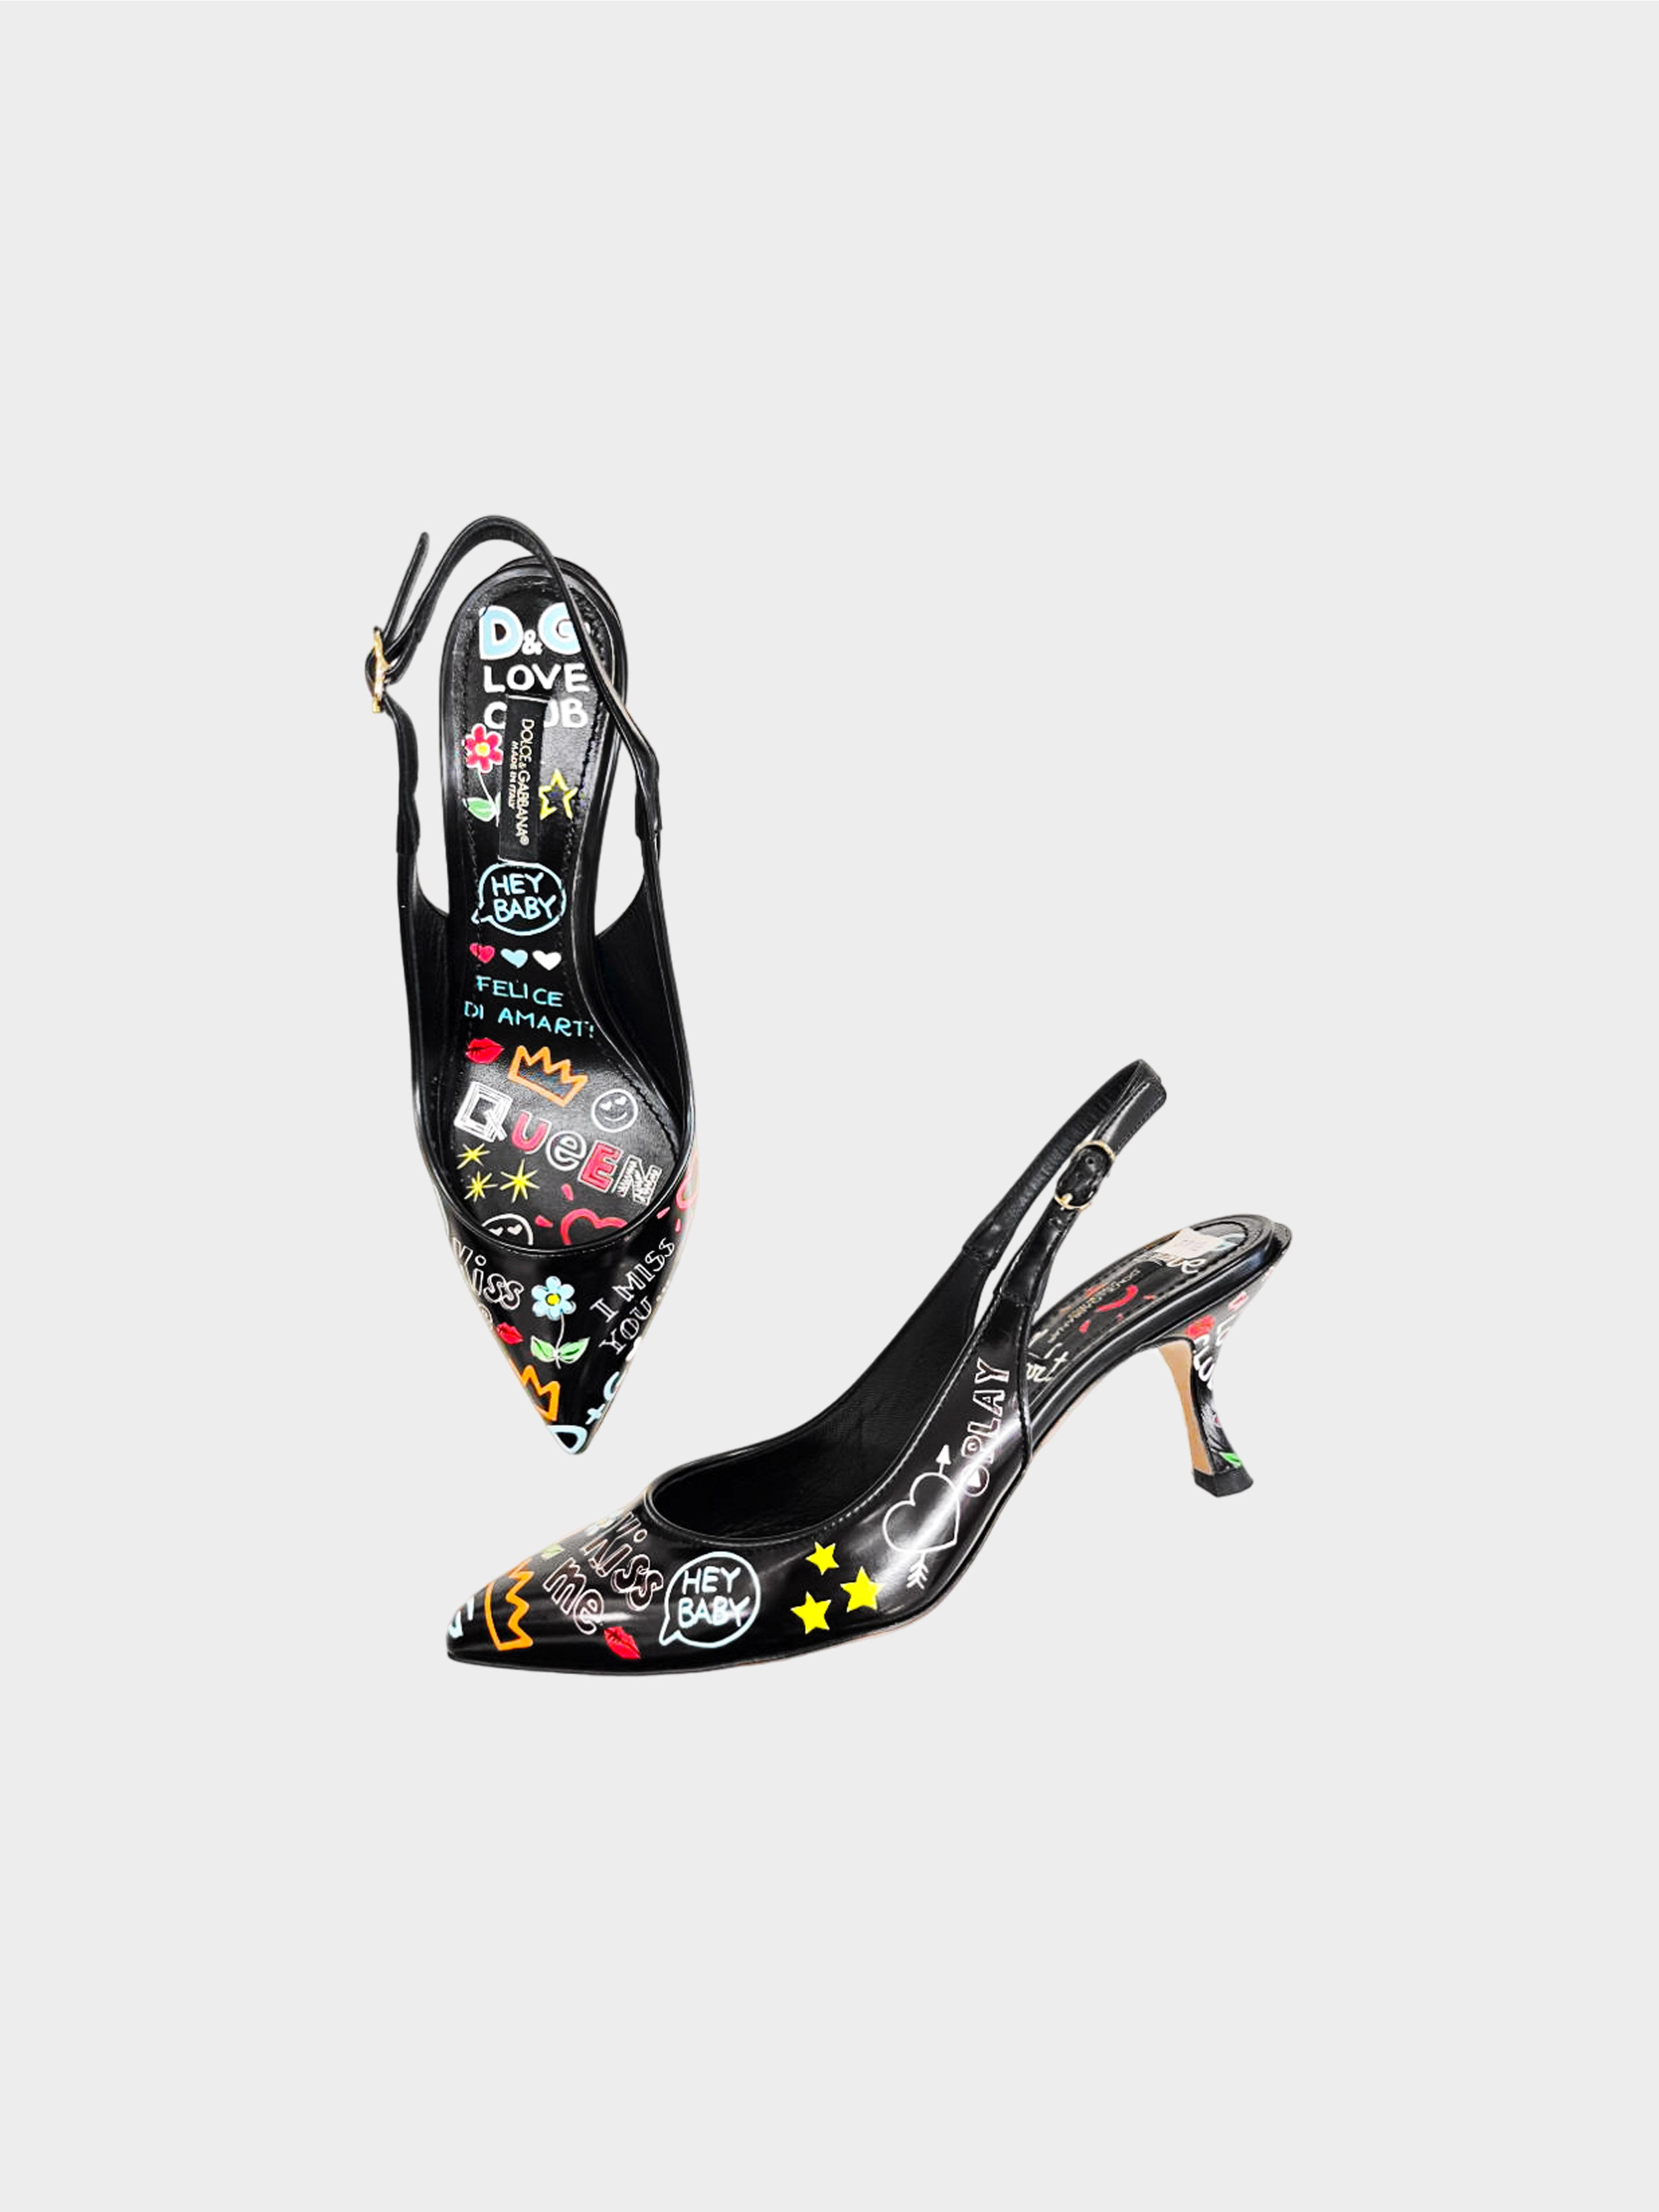 Dolce and Gabbana 2017 Graffiti Slingback Heels